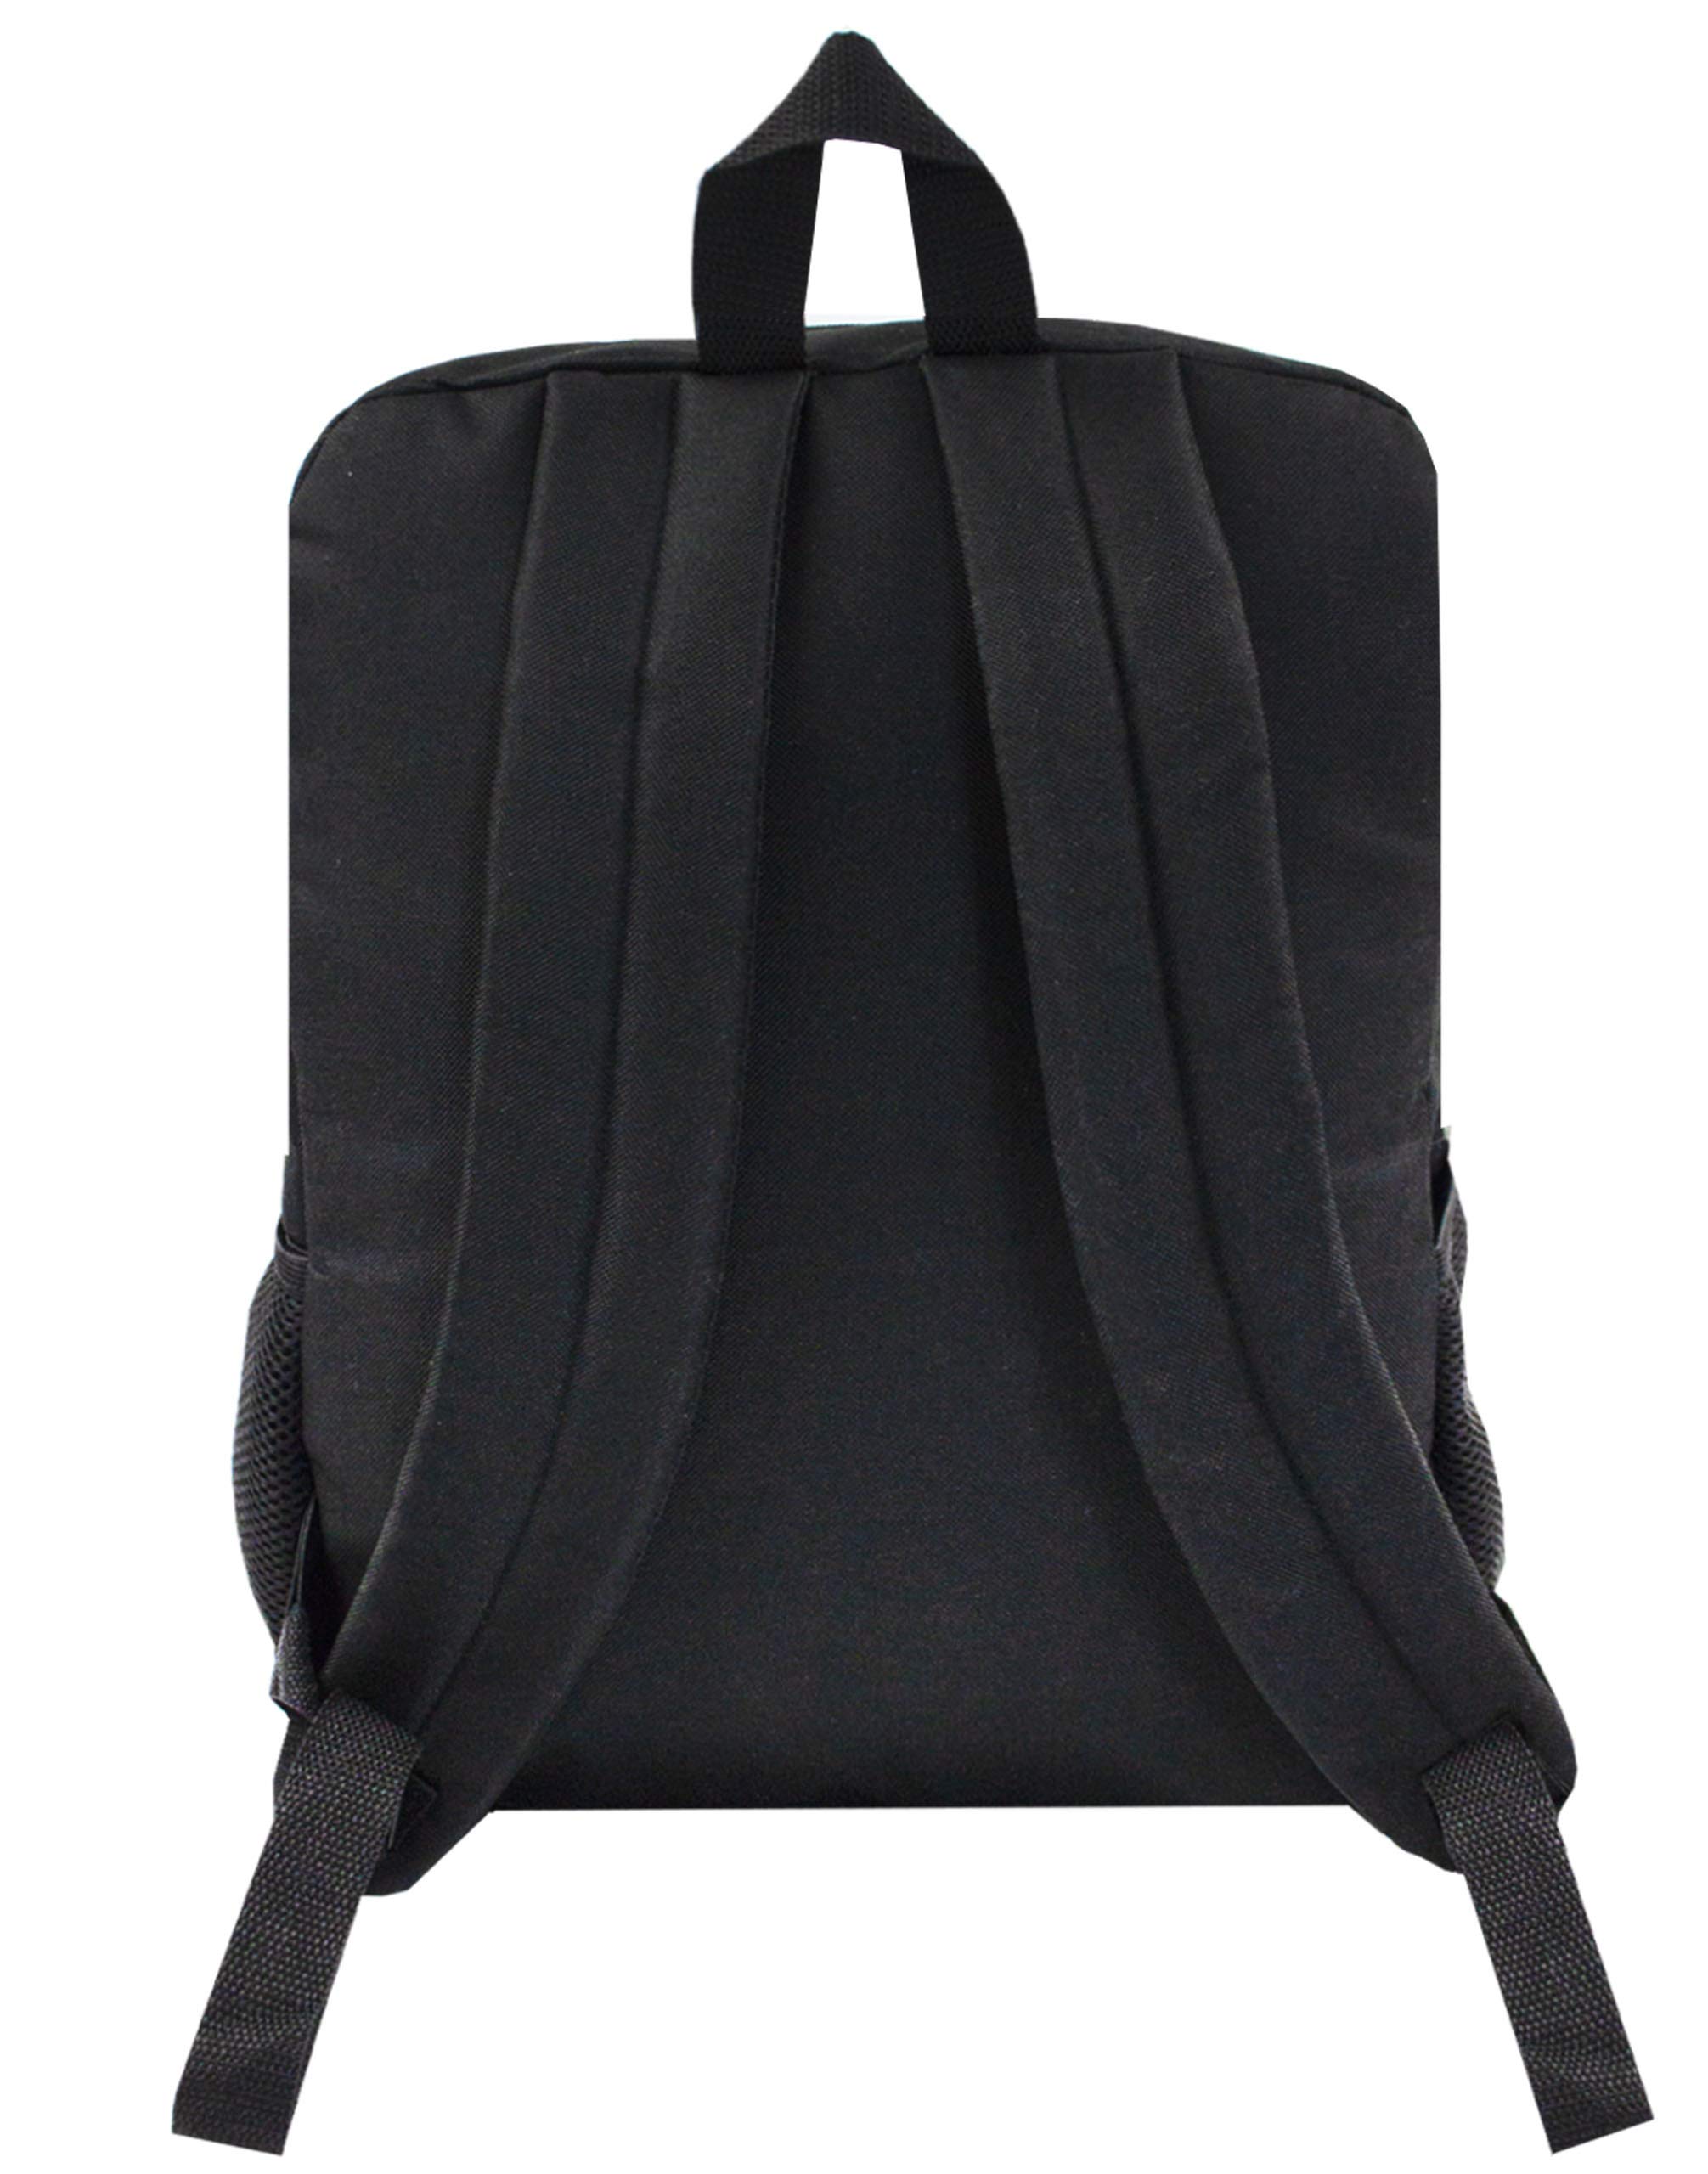 Minecraft Boy's Schoolbag Set, Black, One Size